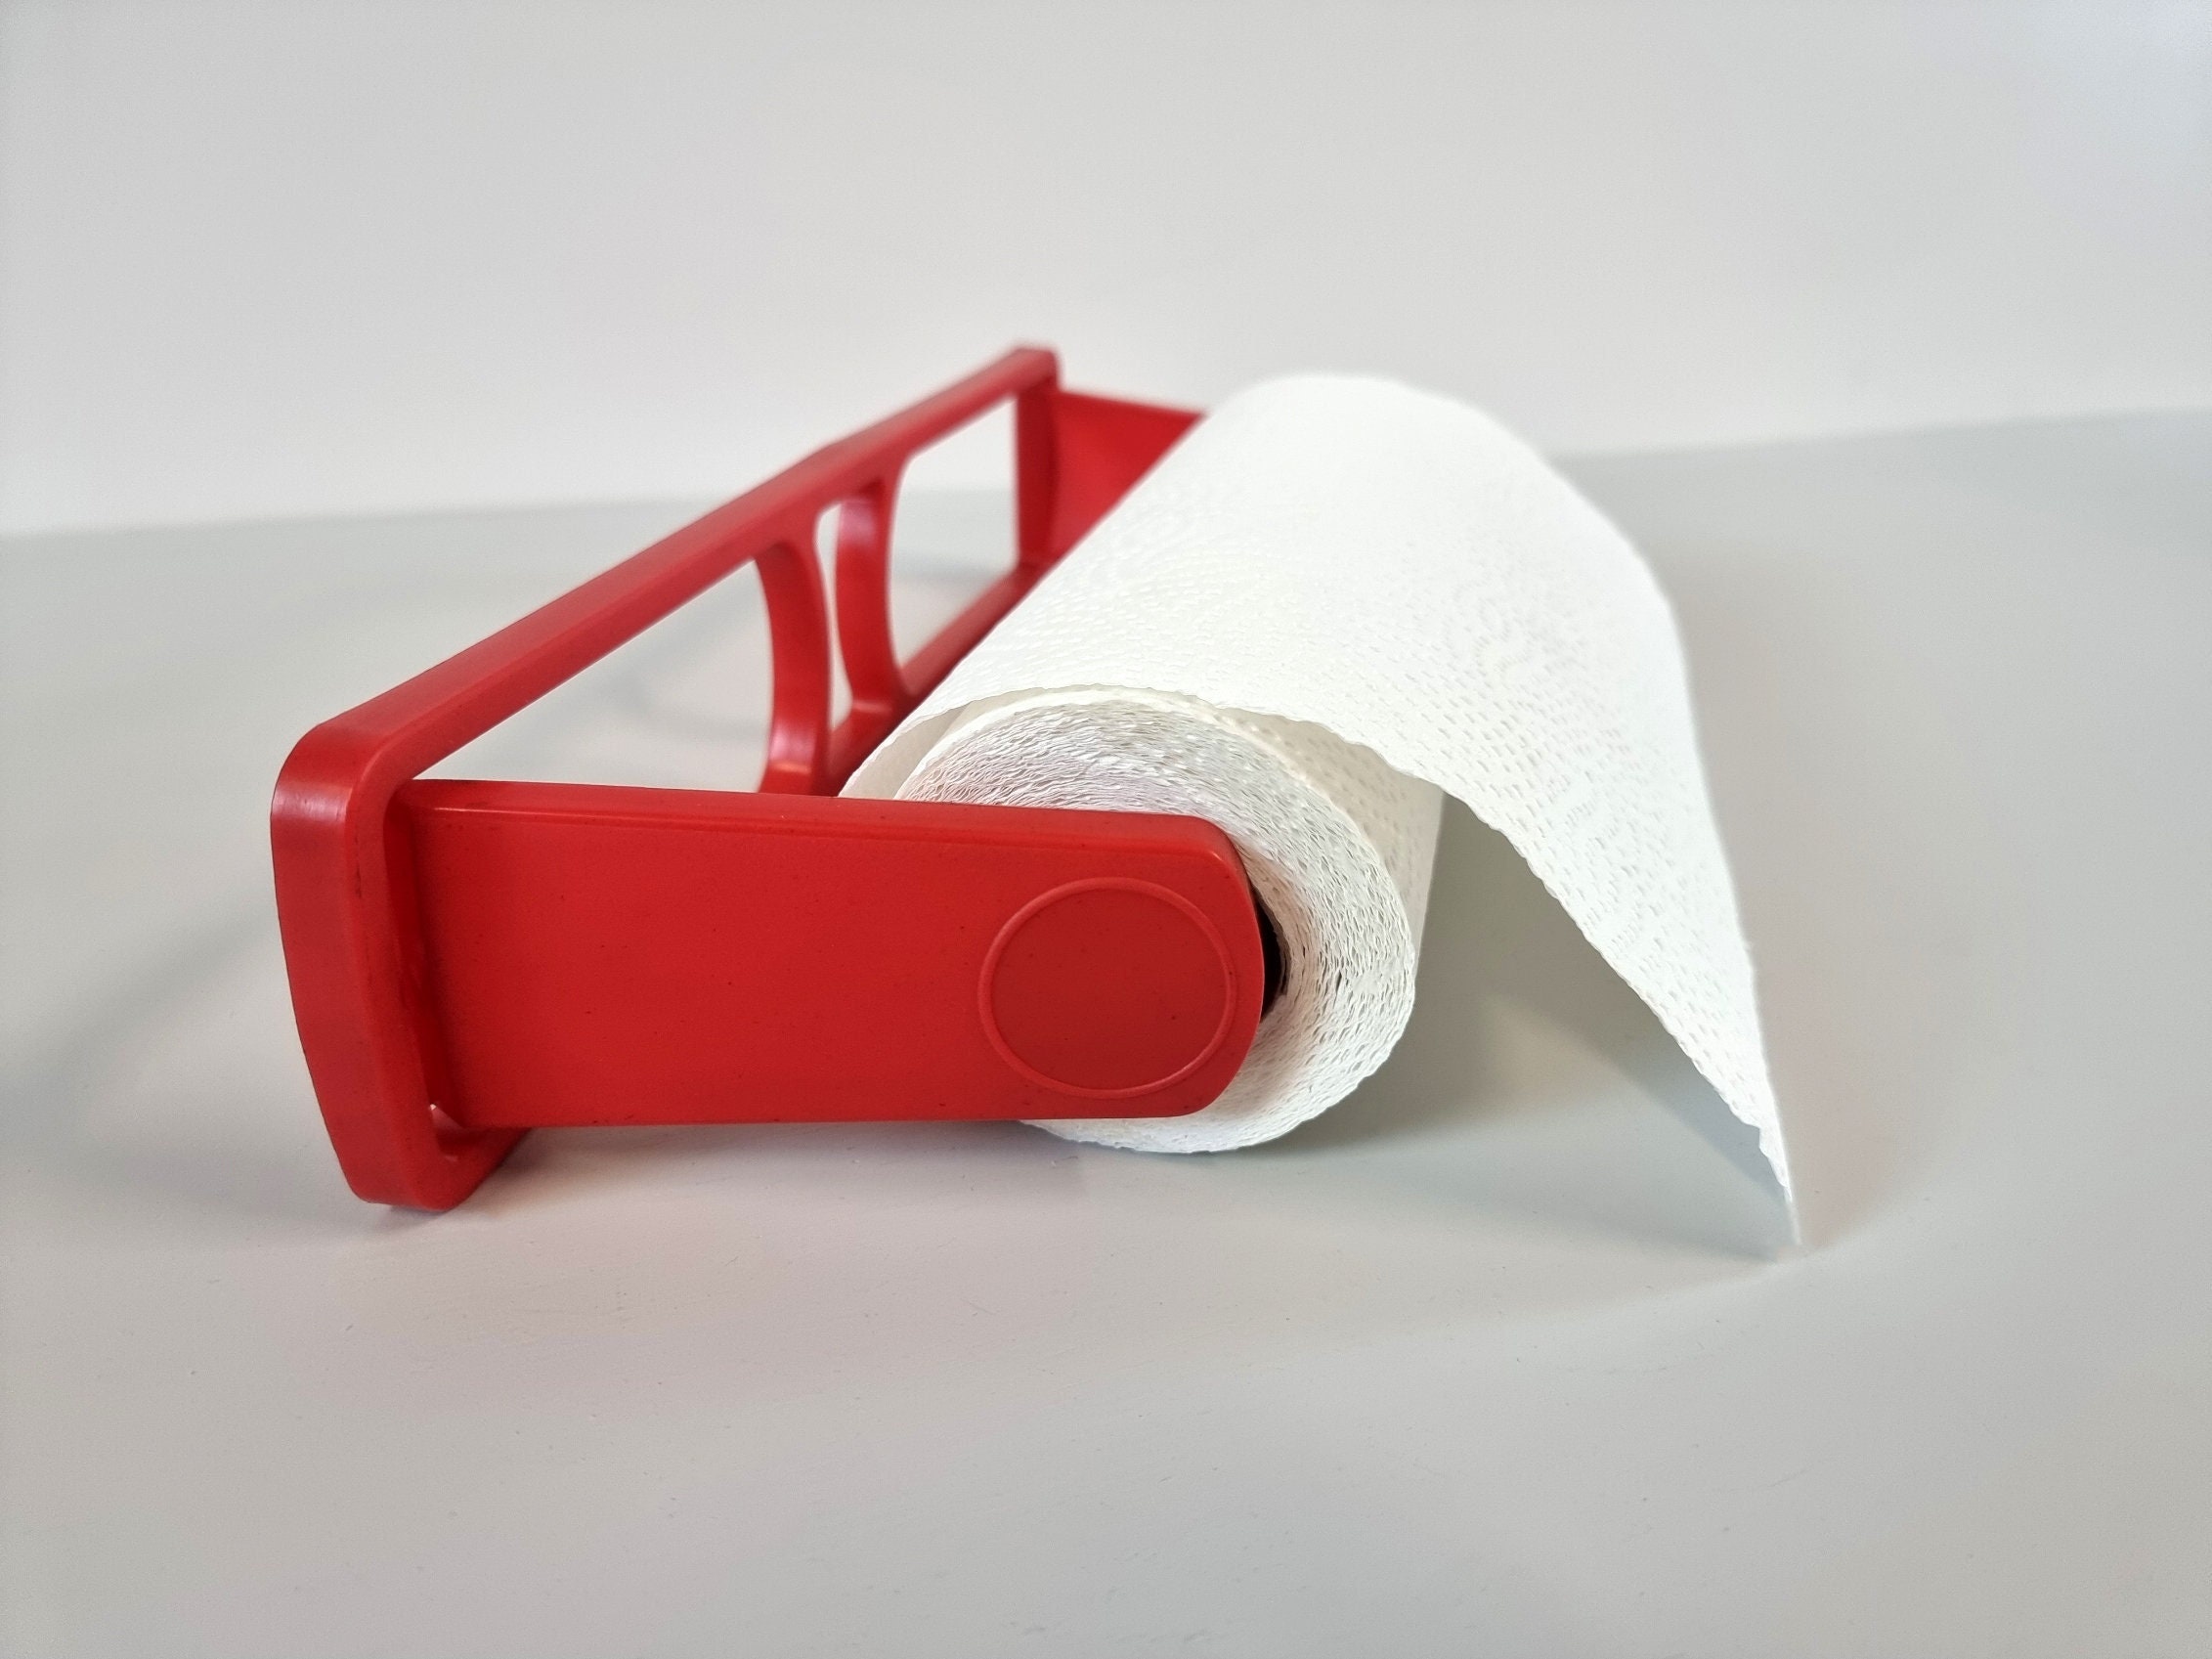 Paper Towel Holder, Shabby Chic Paper Towel Holder, Kitchen Decor